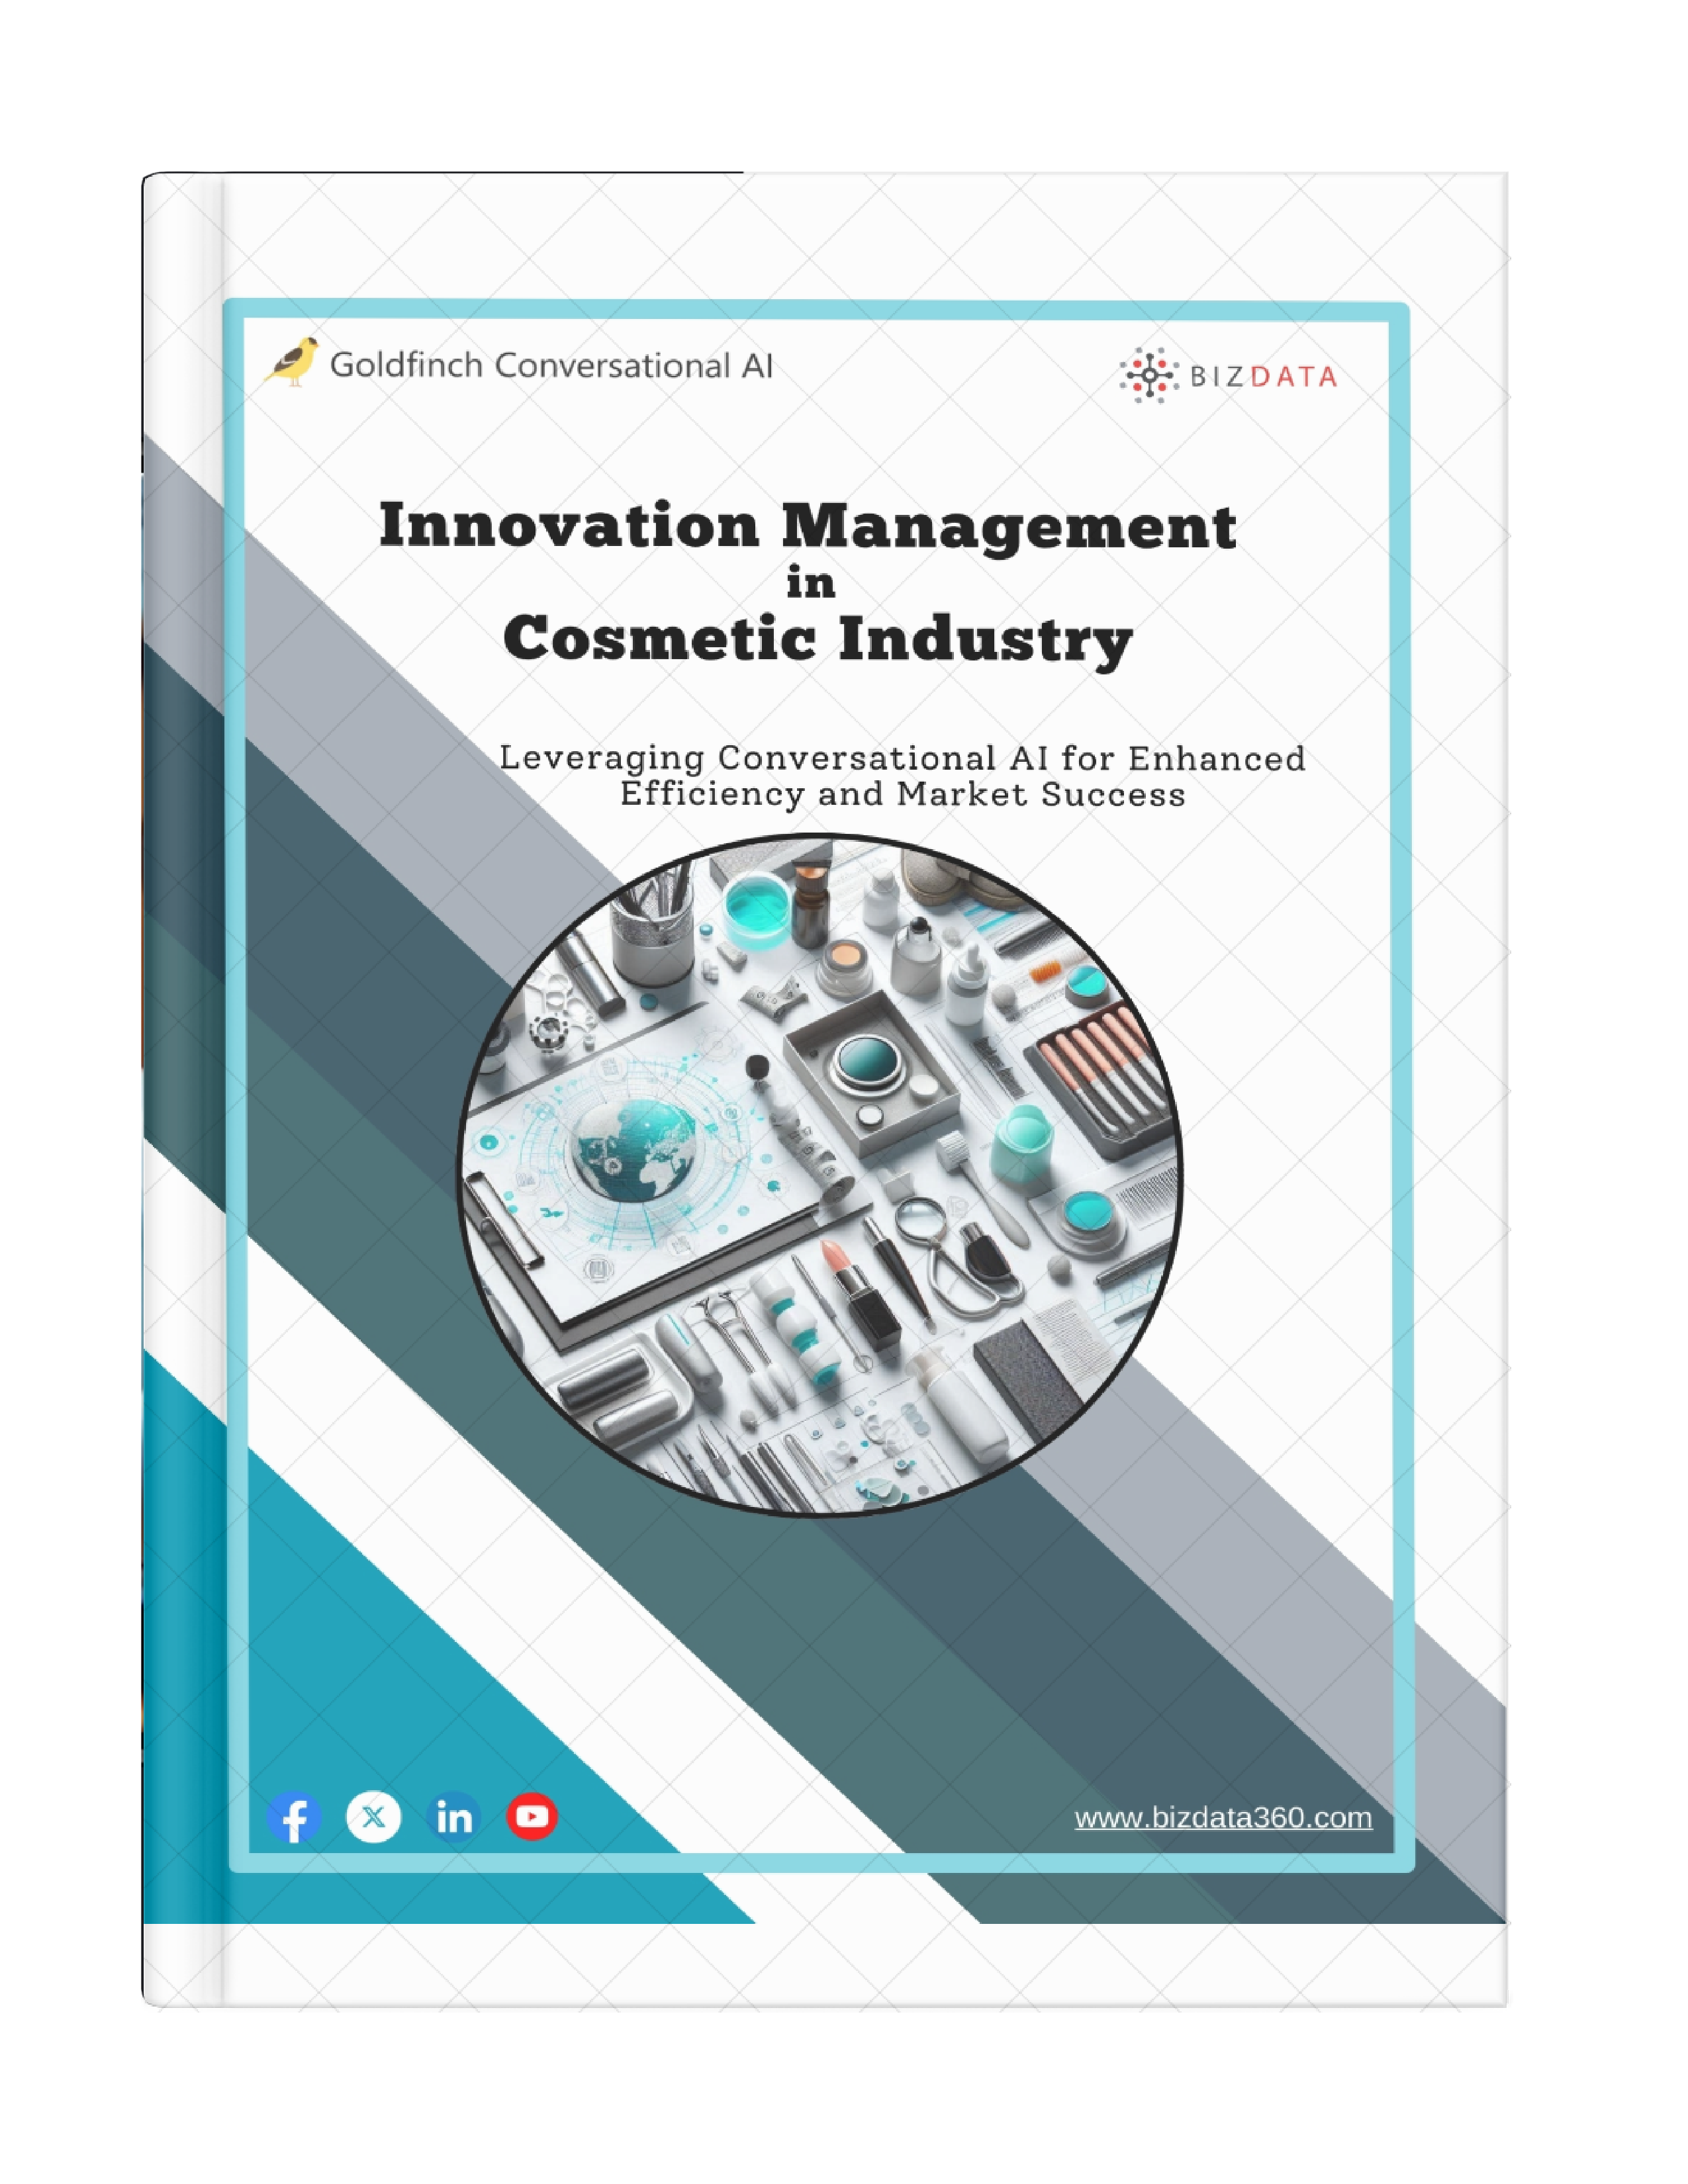 Innovation Management